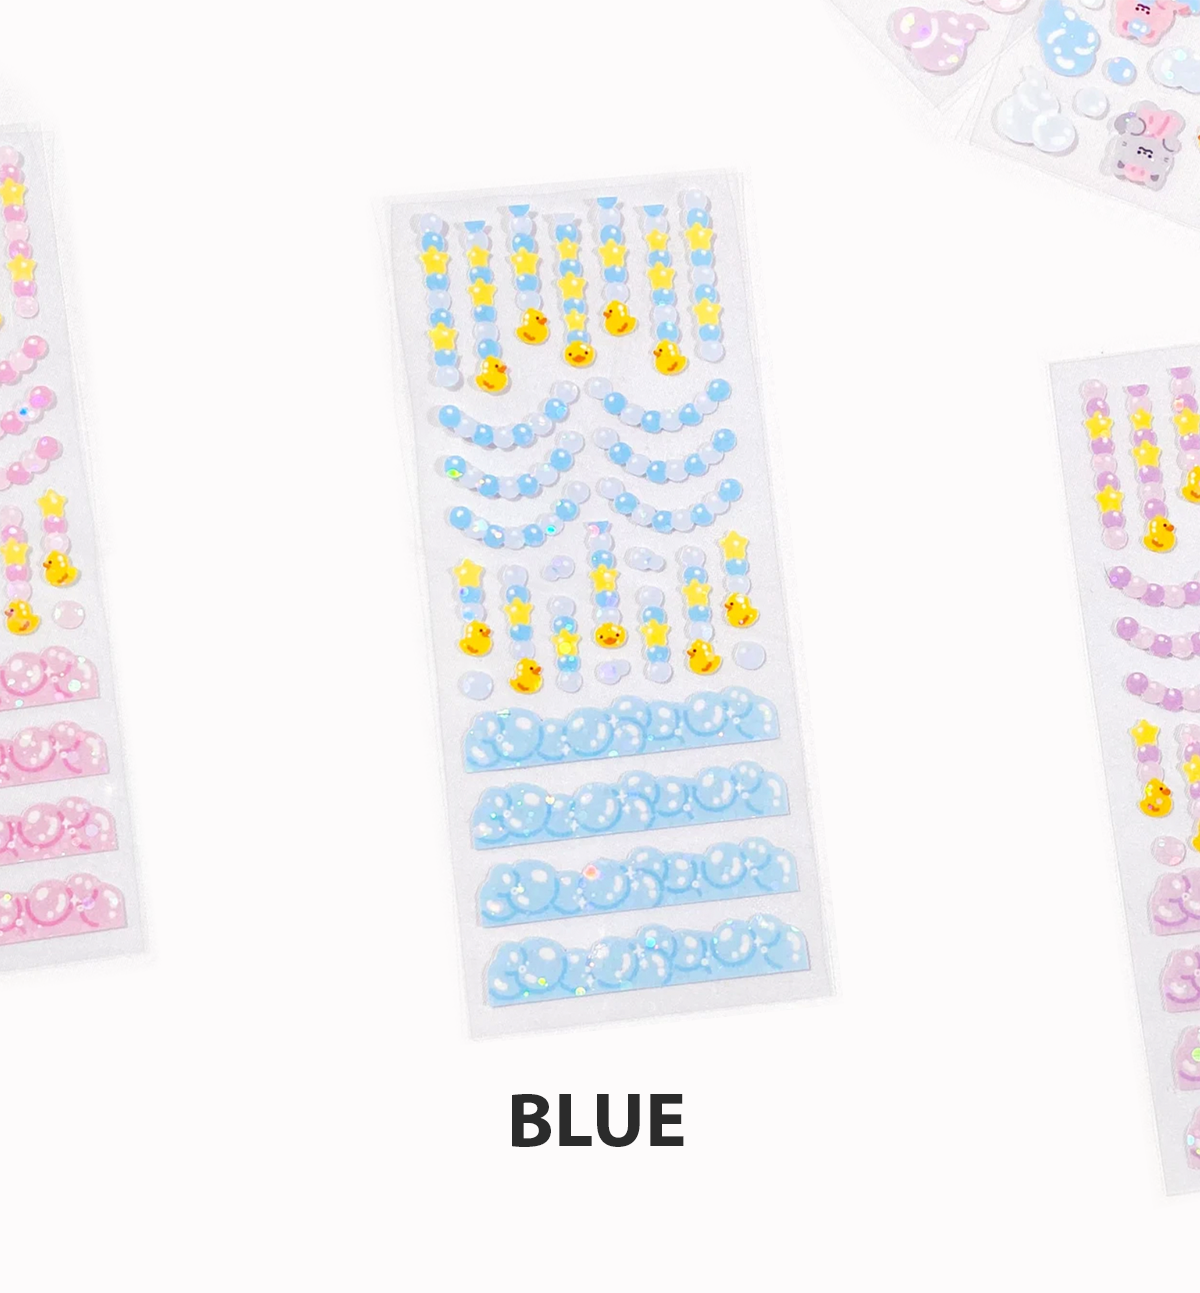 Ducky Bubbles Seal Sticker [3 Colors]